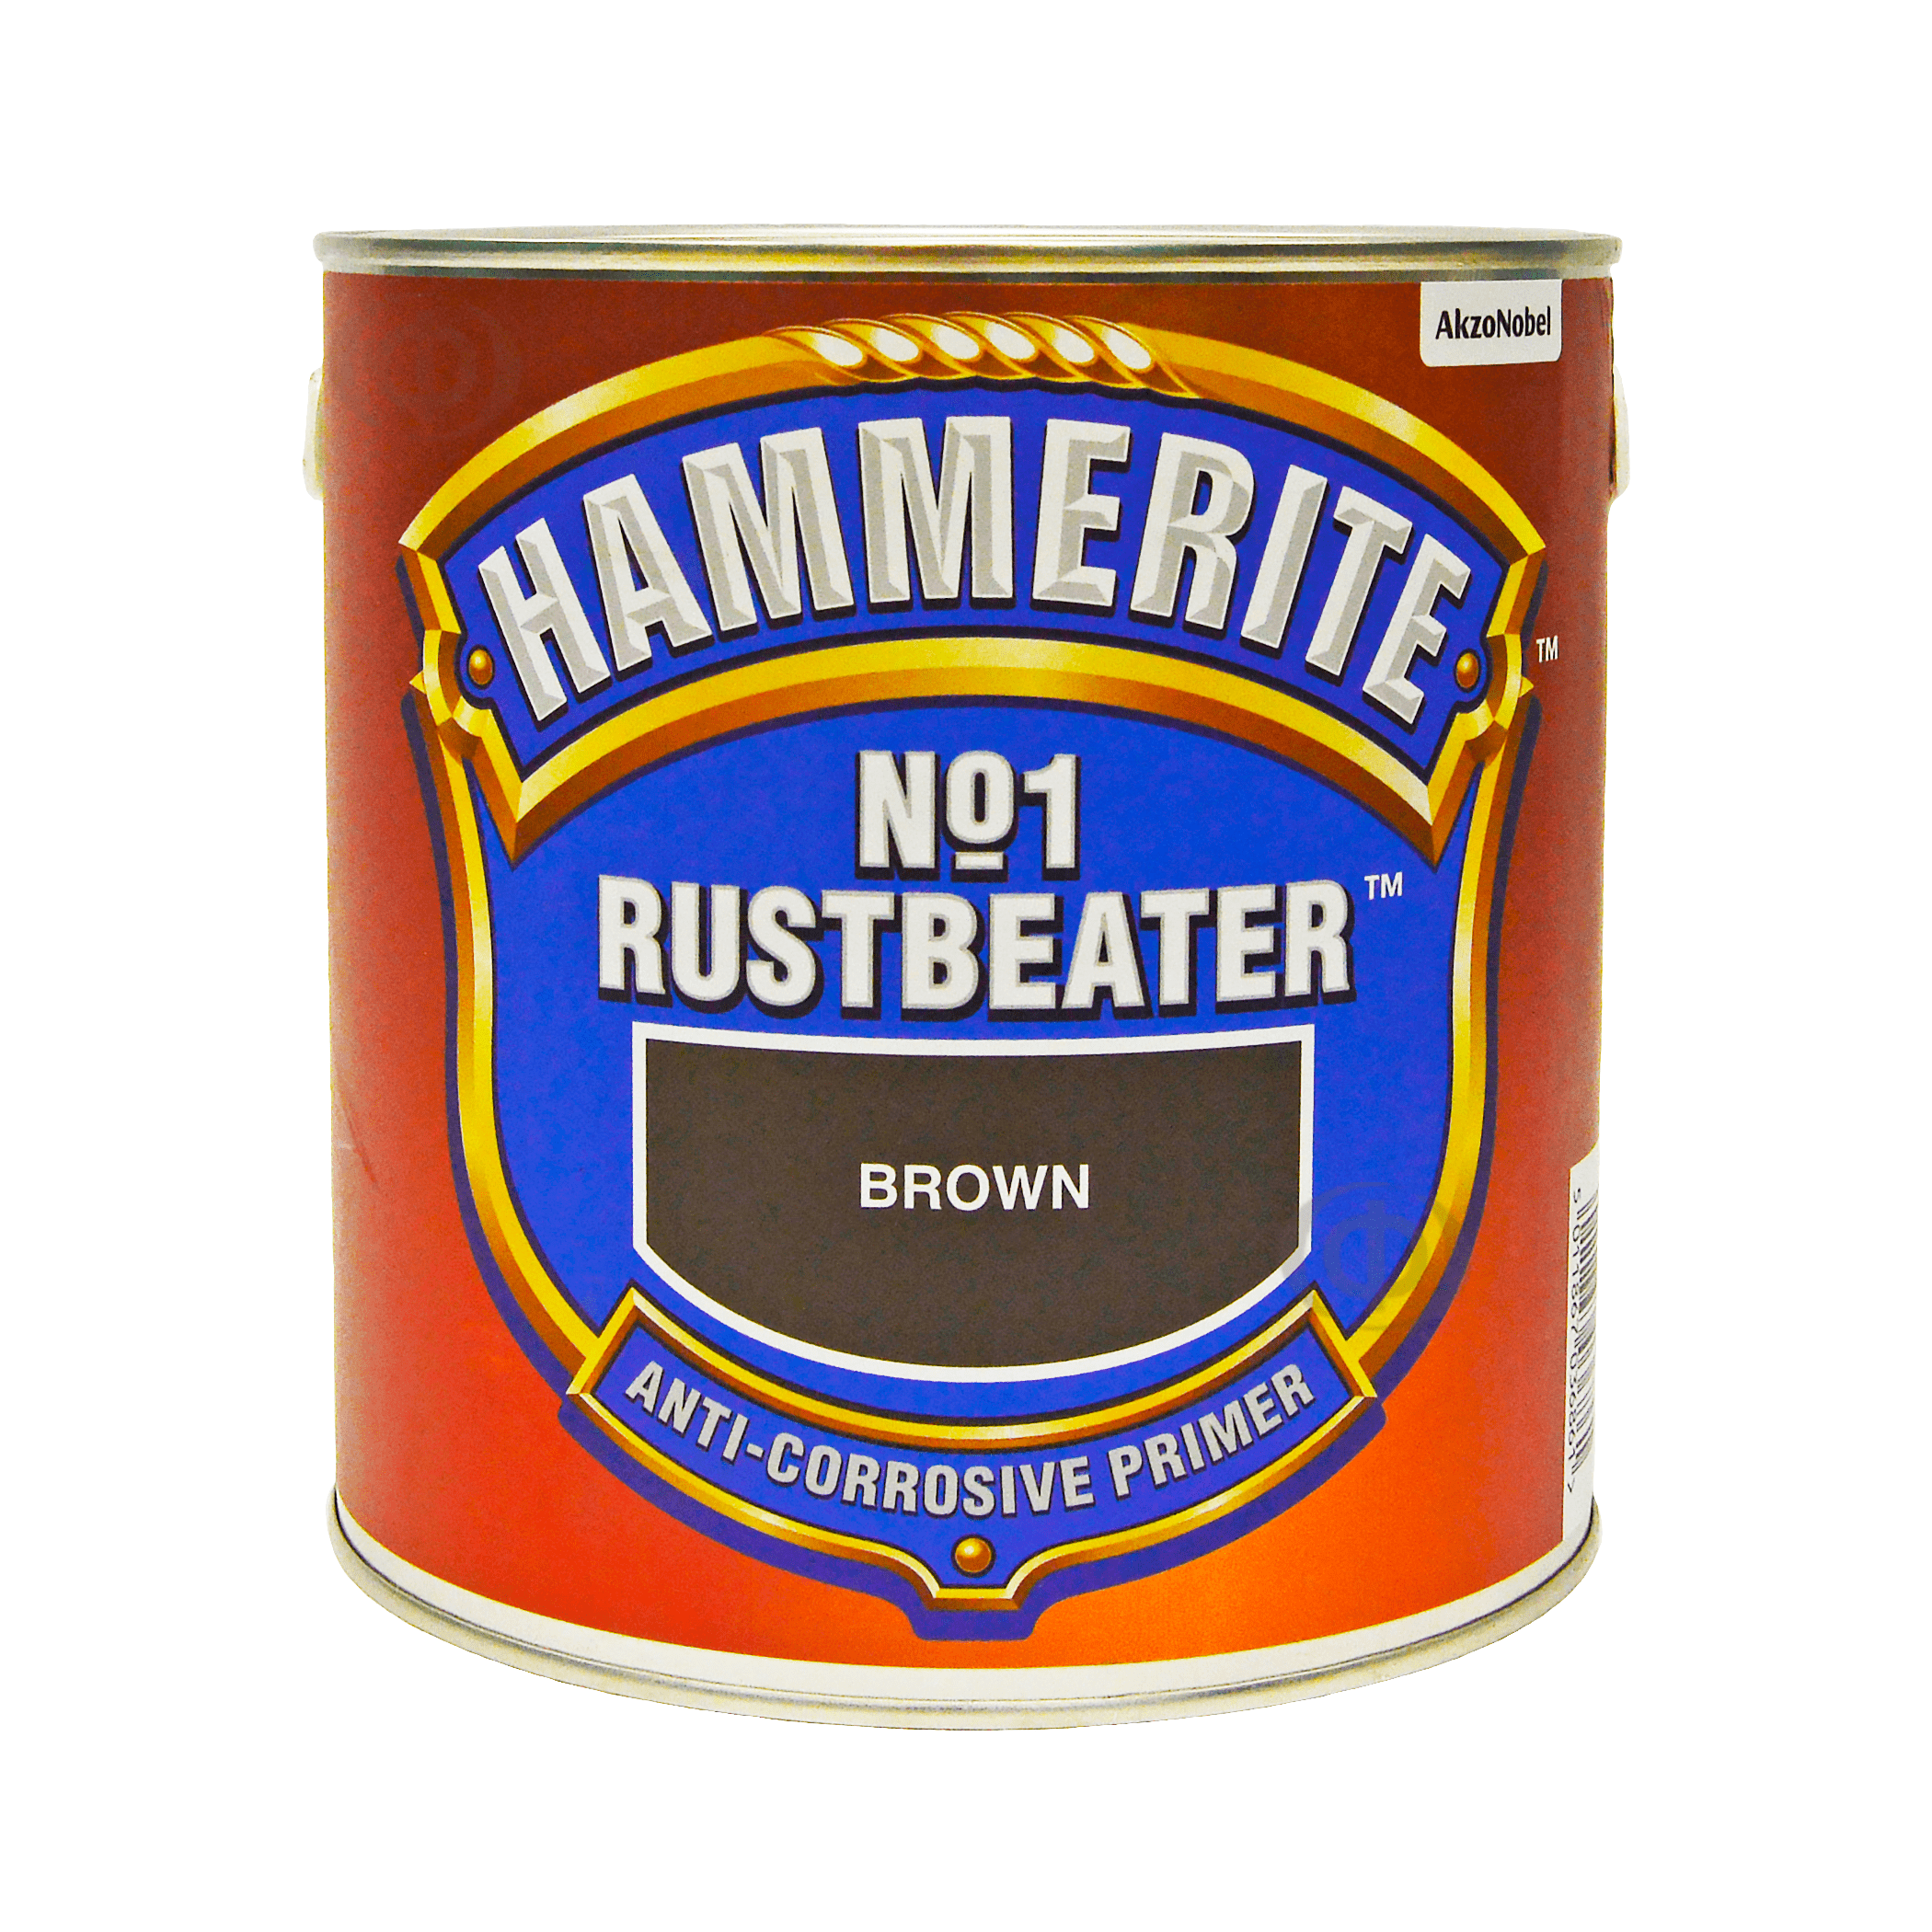 Hammerite rust beater отзывы фото 1